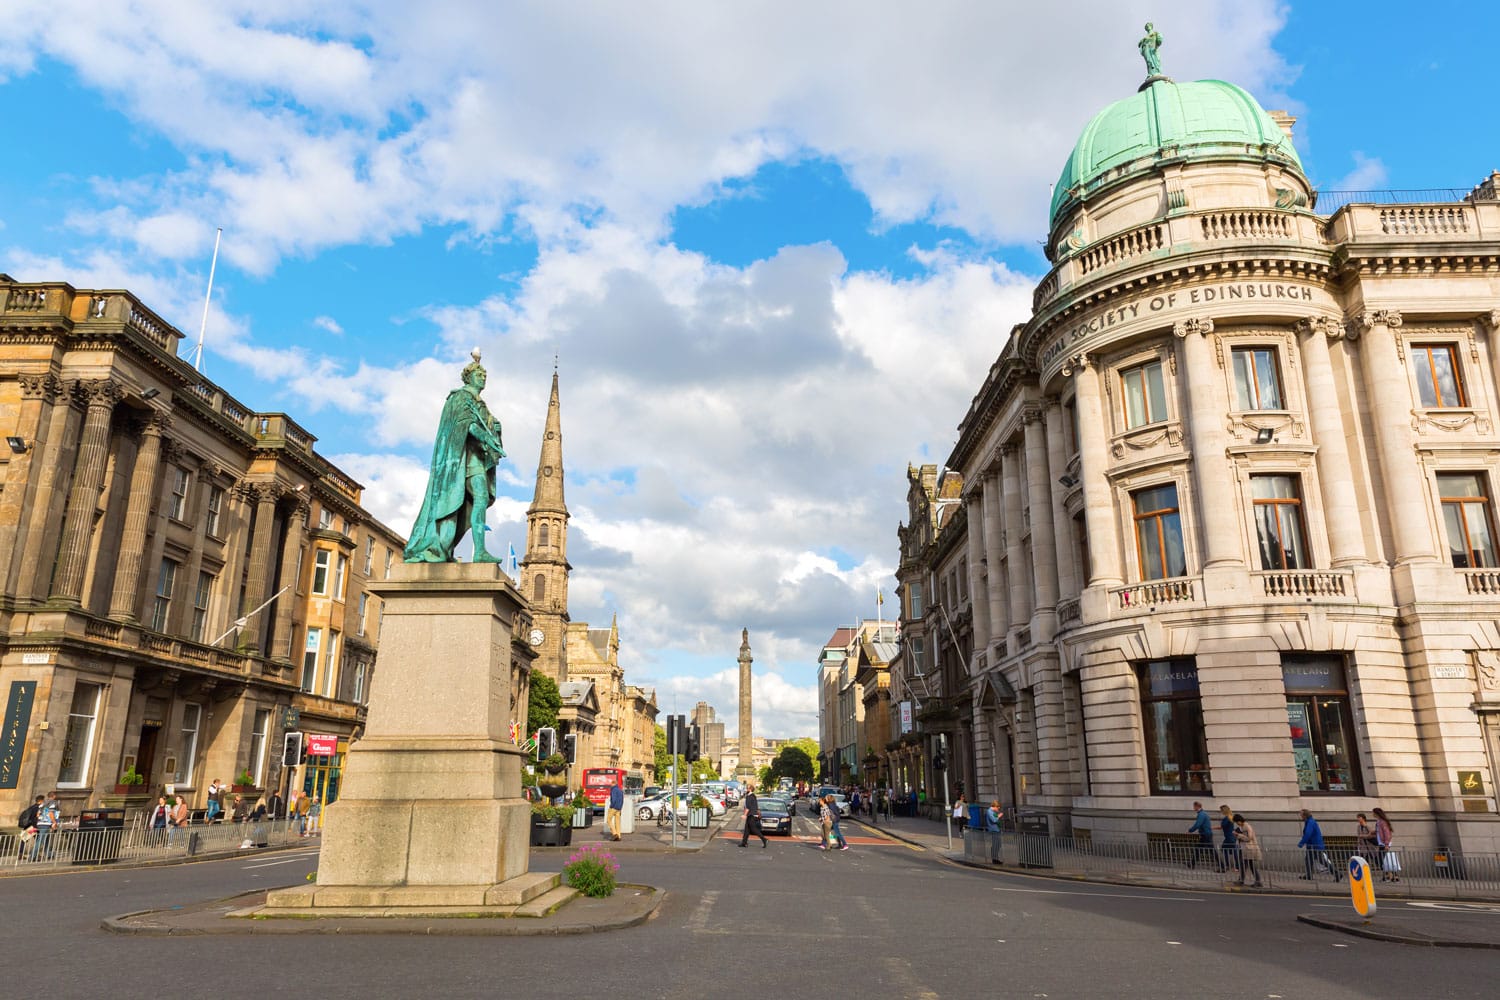 George Street with William Pitt statue in Edinburgh, Scotland